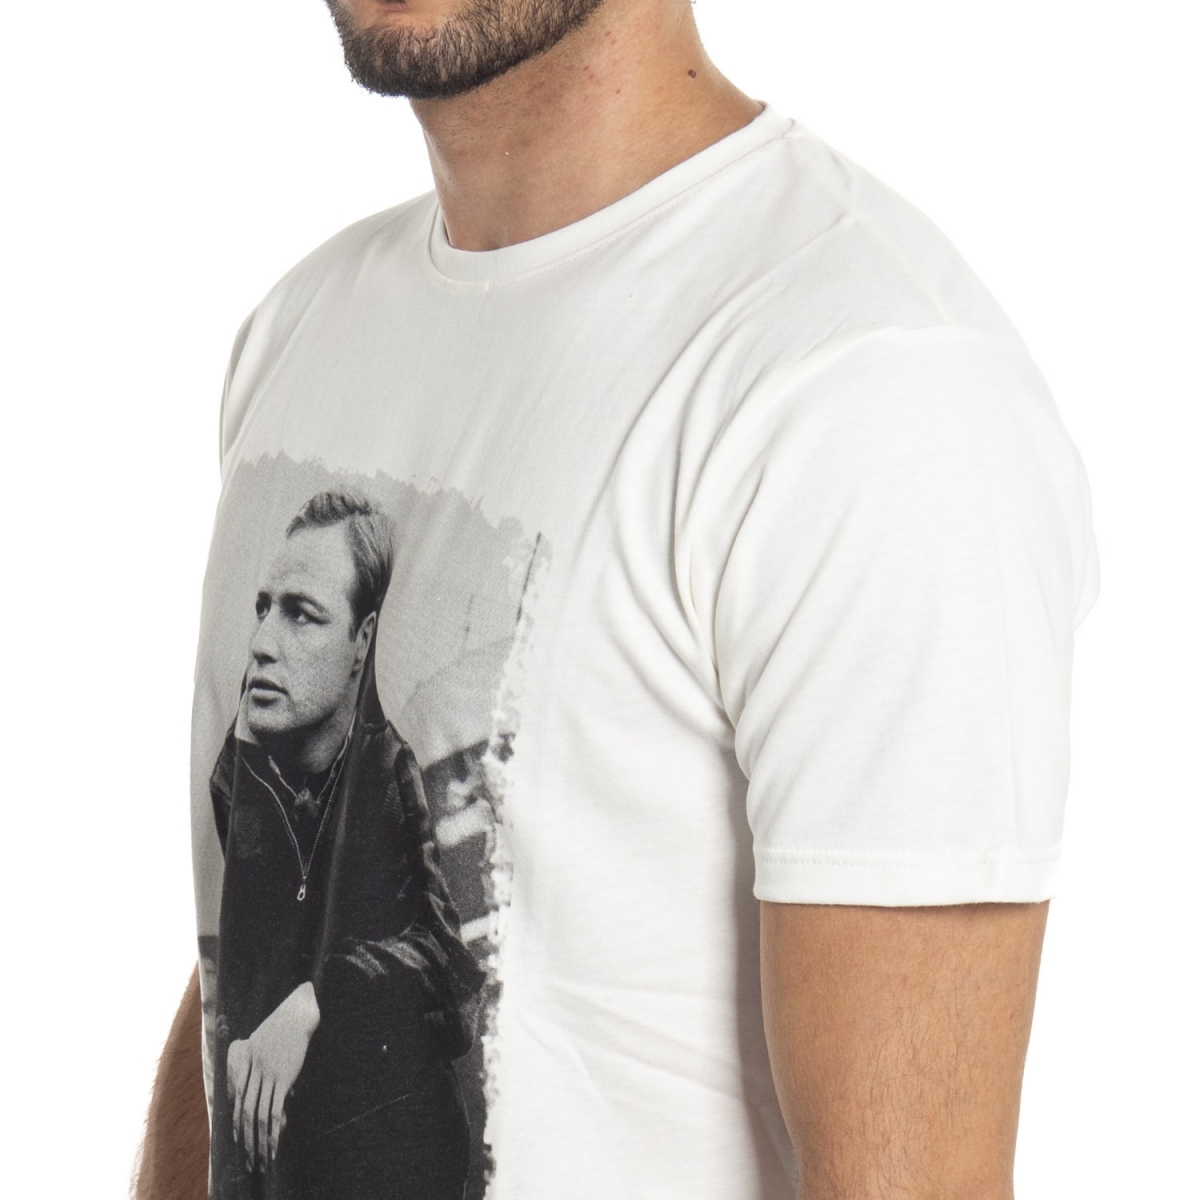 abbigliamento T-shirt uomo T-Shirt LPX16-34 LANDEK PARK Cafedelmar Shop